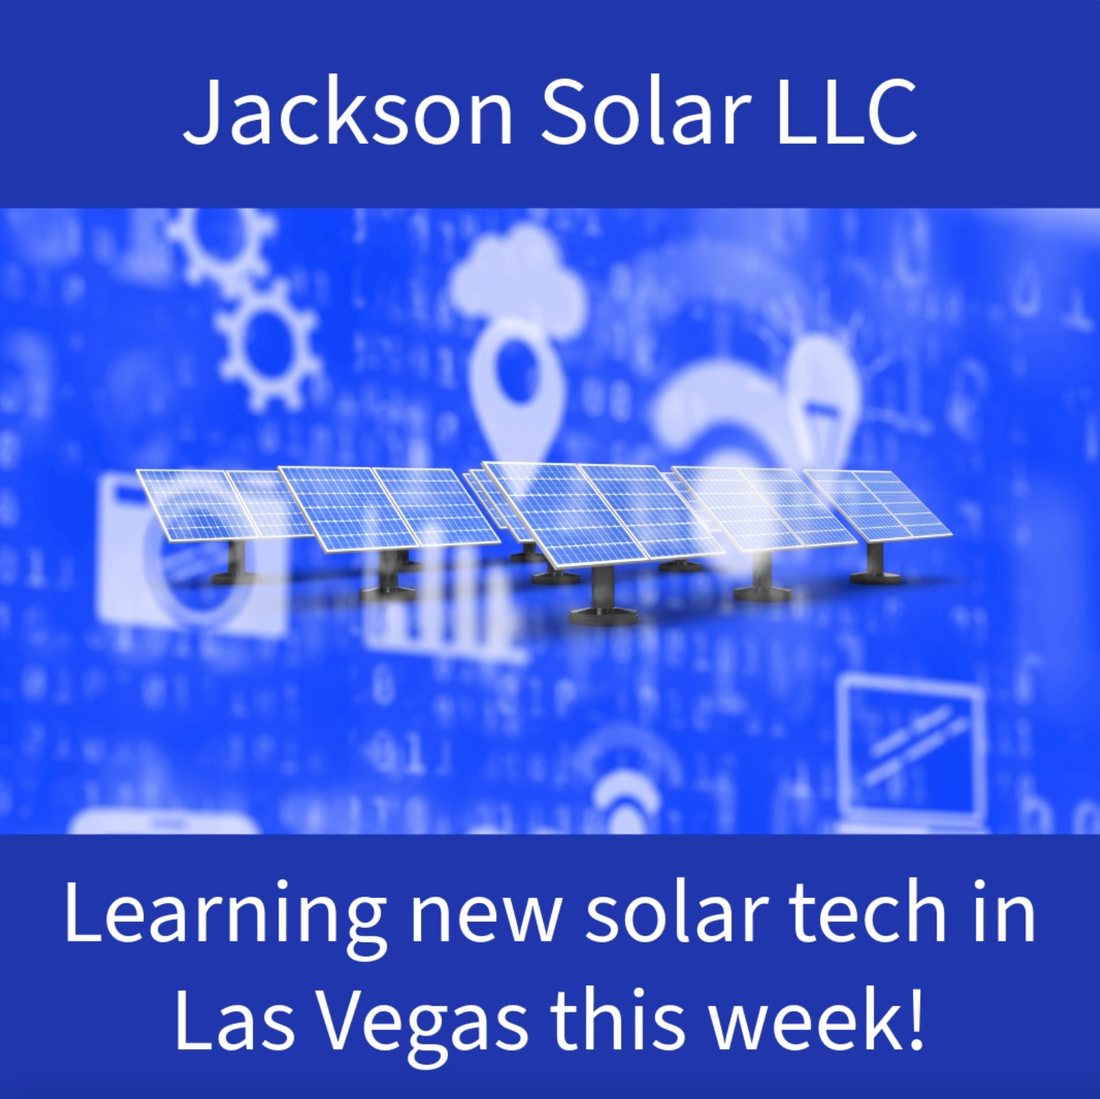 Jackson Solar LLC in Las Vegas